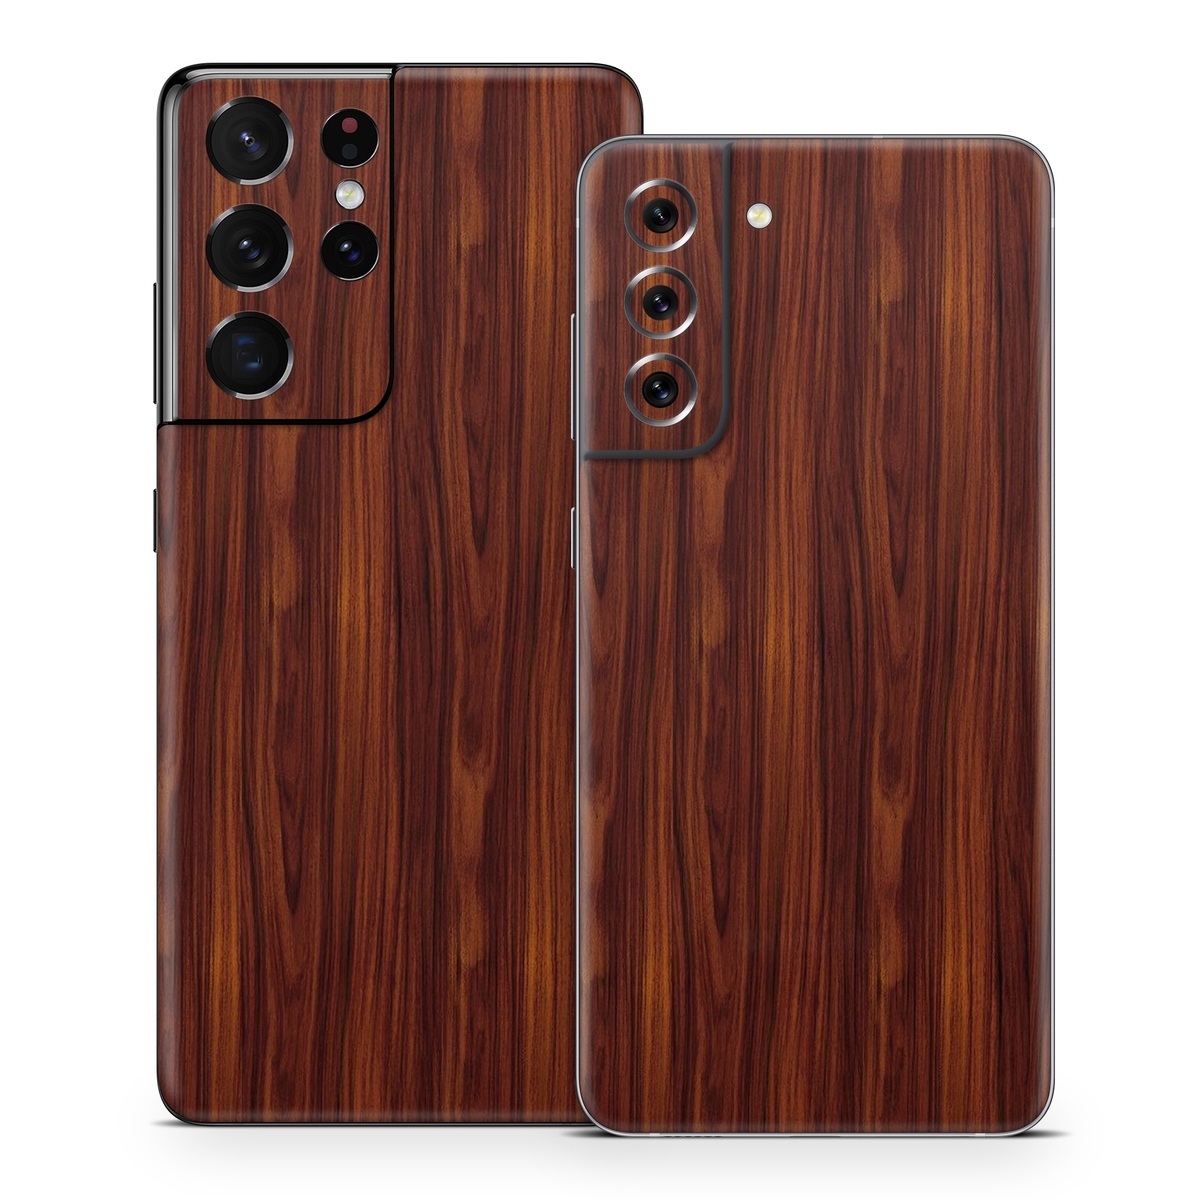 Samsung Galaxy S21 Series Skin design of Wood, Red, Brown, Hardwood, Wood flooring, Wood stain, Caramel color, Laminate flooring, Flooring, Varnish, with black, red colors